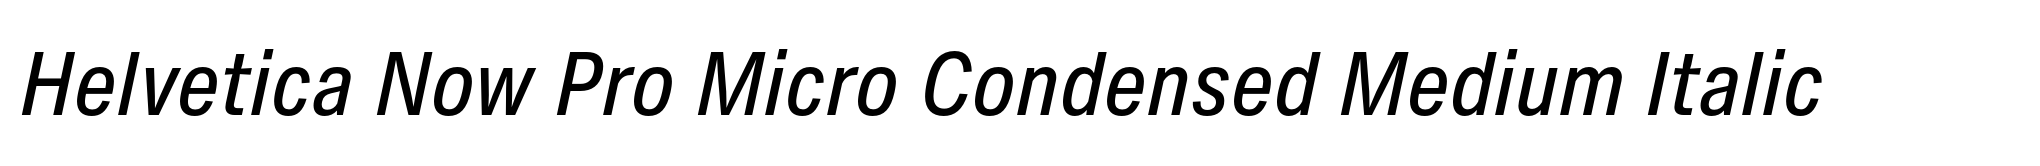 Helvetica Now Pro Micro Condensed Medium Italic image